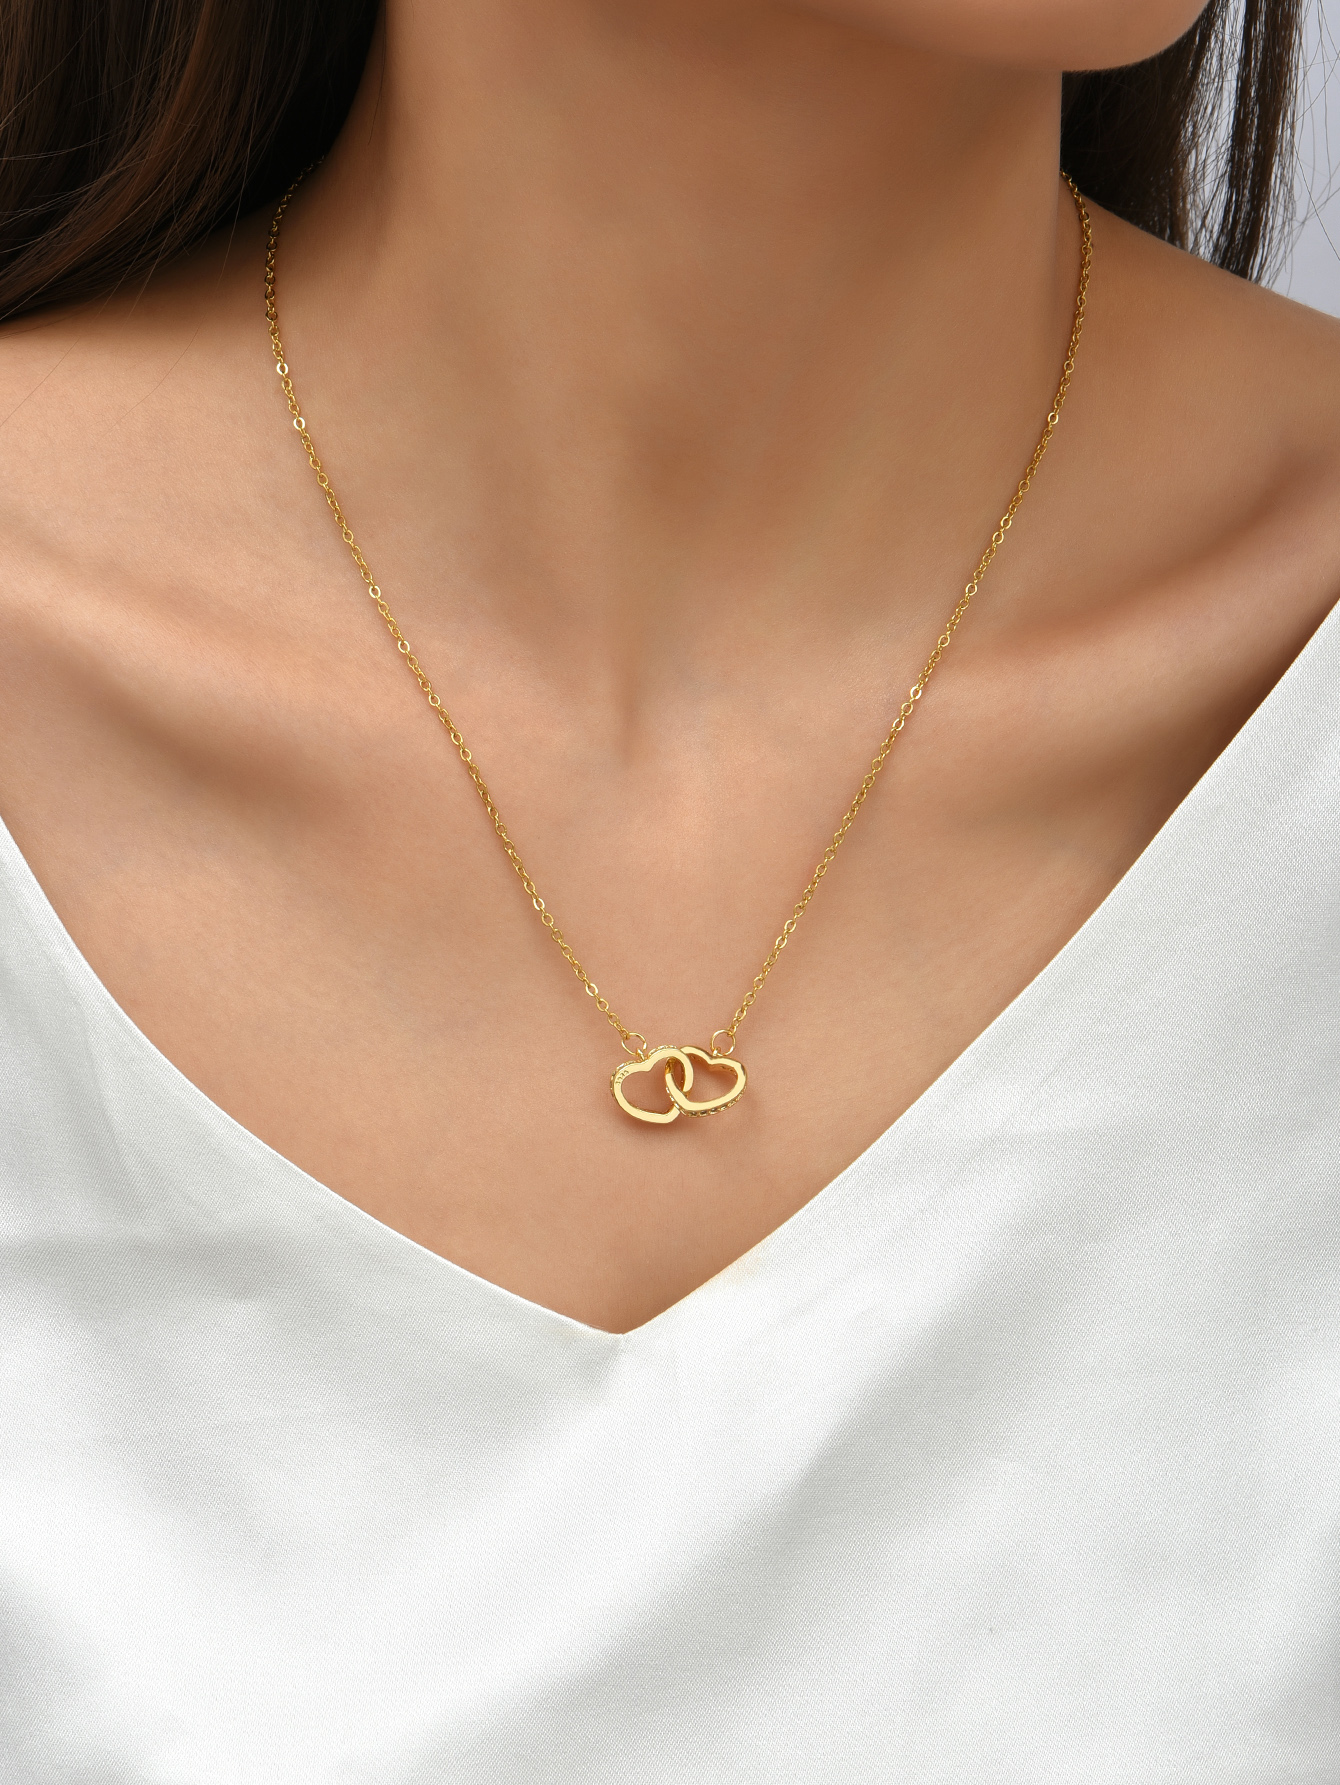 10pcs Gold Tone Linked Crystal Double Heart Pendant Necklace|GCJ292|UK SELLER